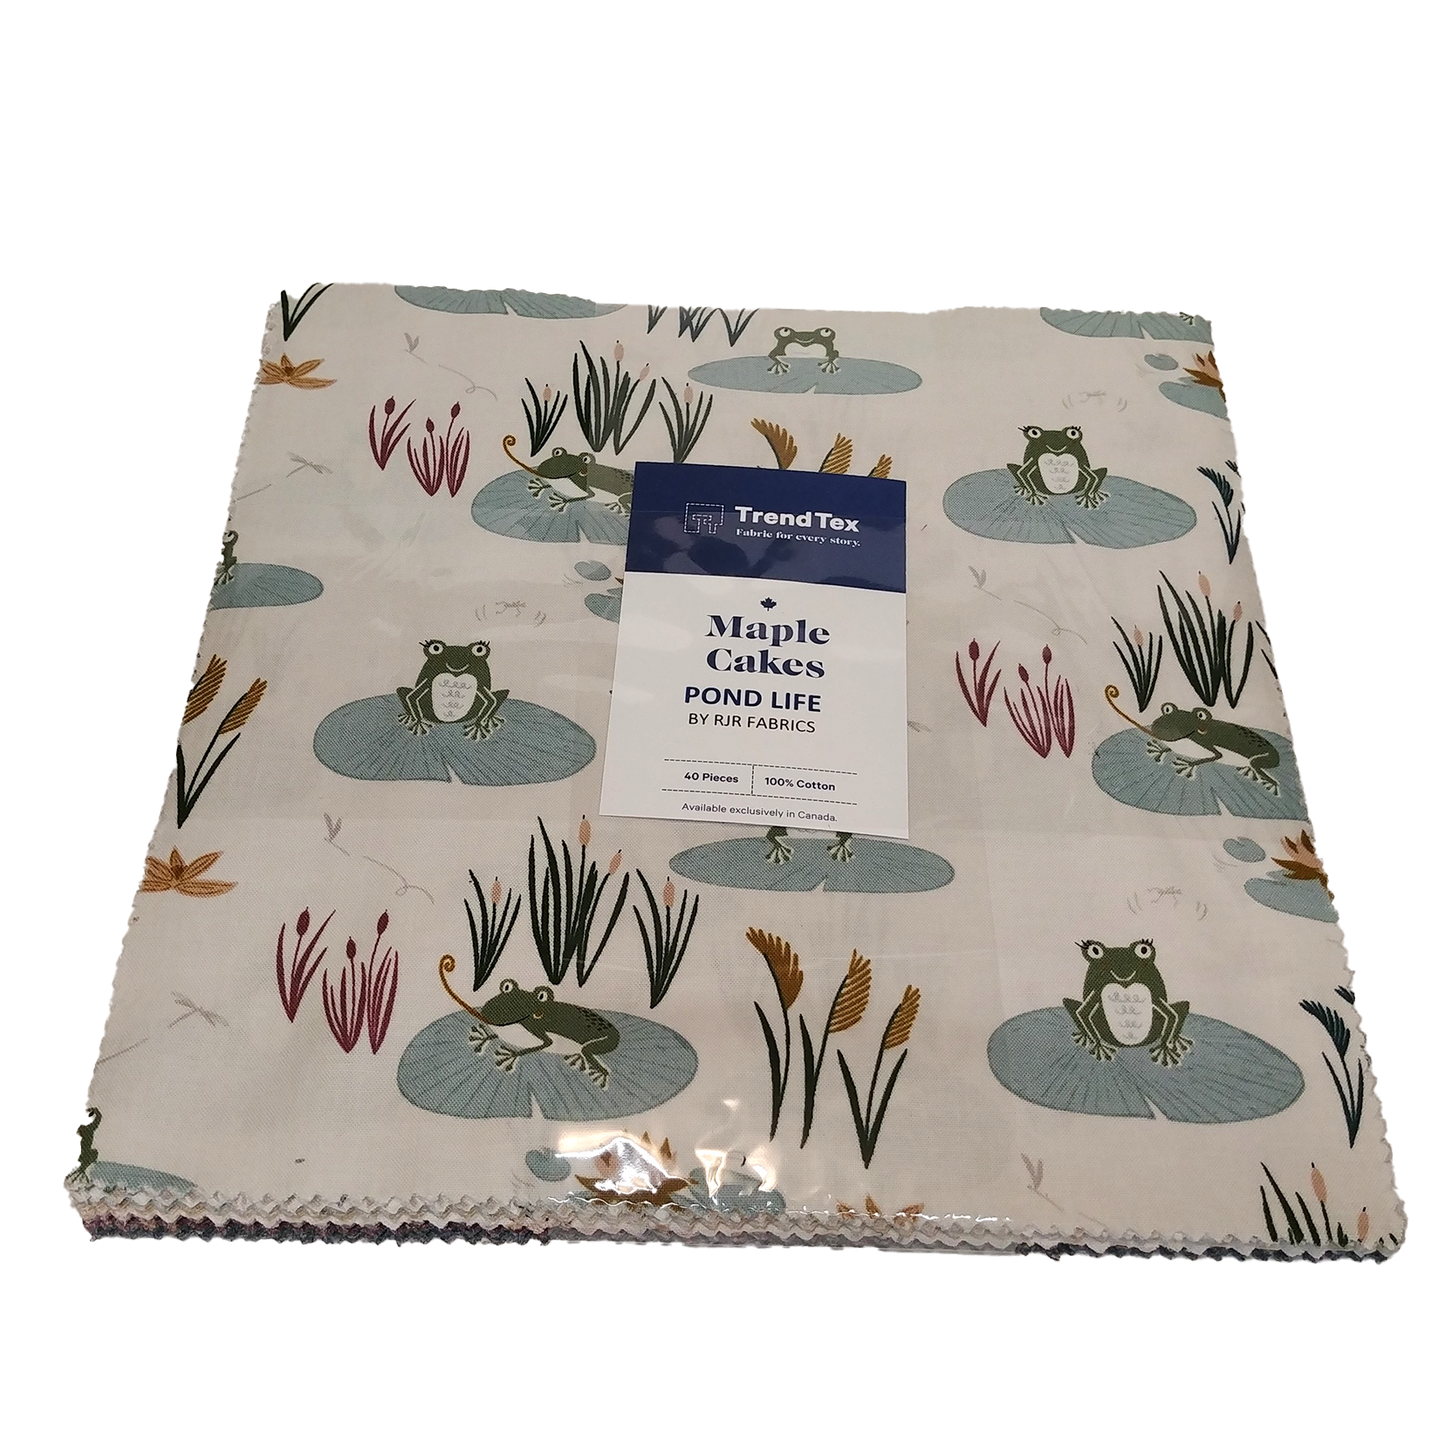 Pond Life (RJR Fabrics) - Maple Cake